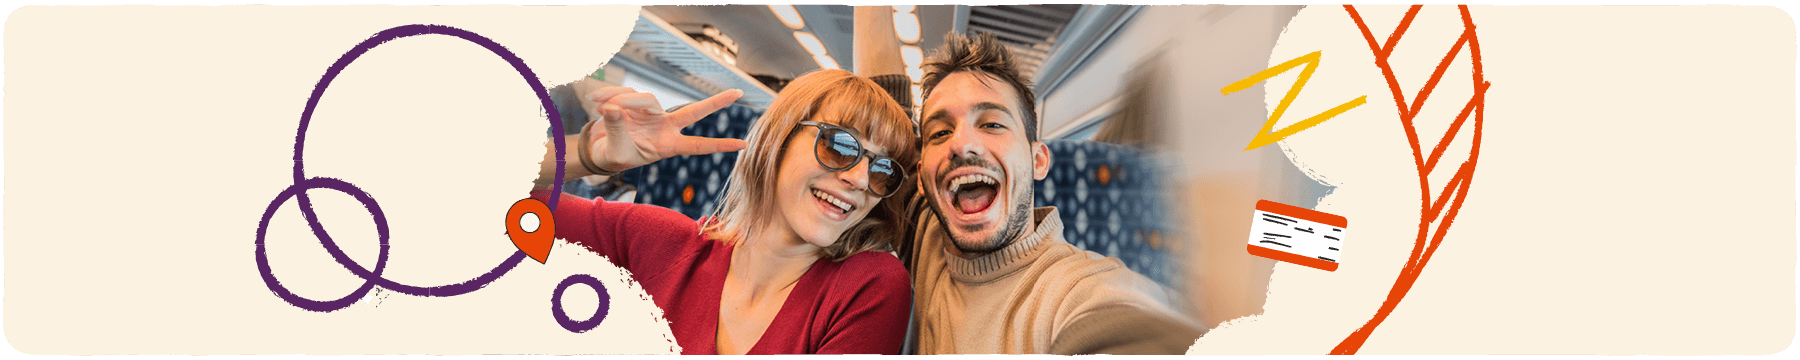 Passengers taking a selfie on a train